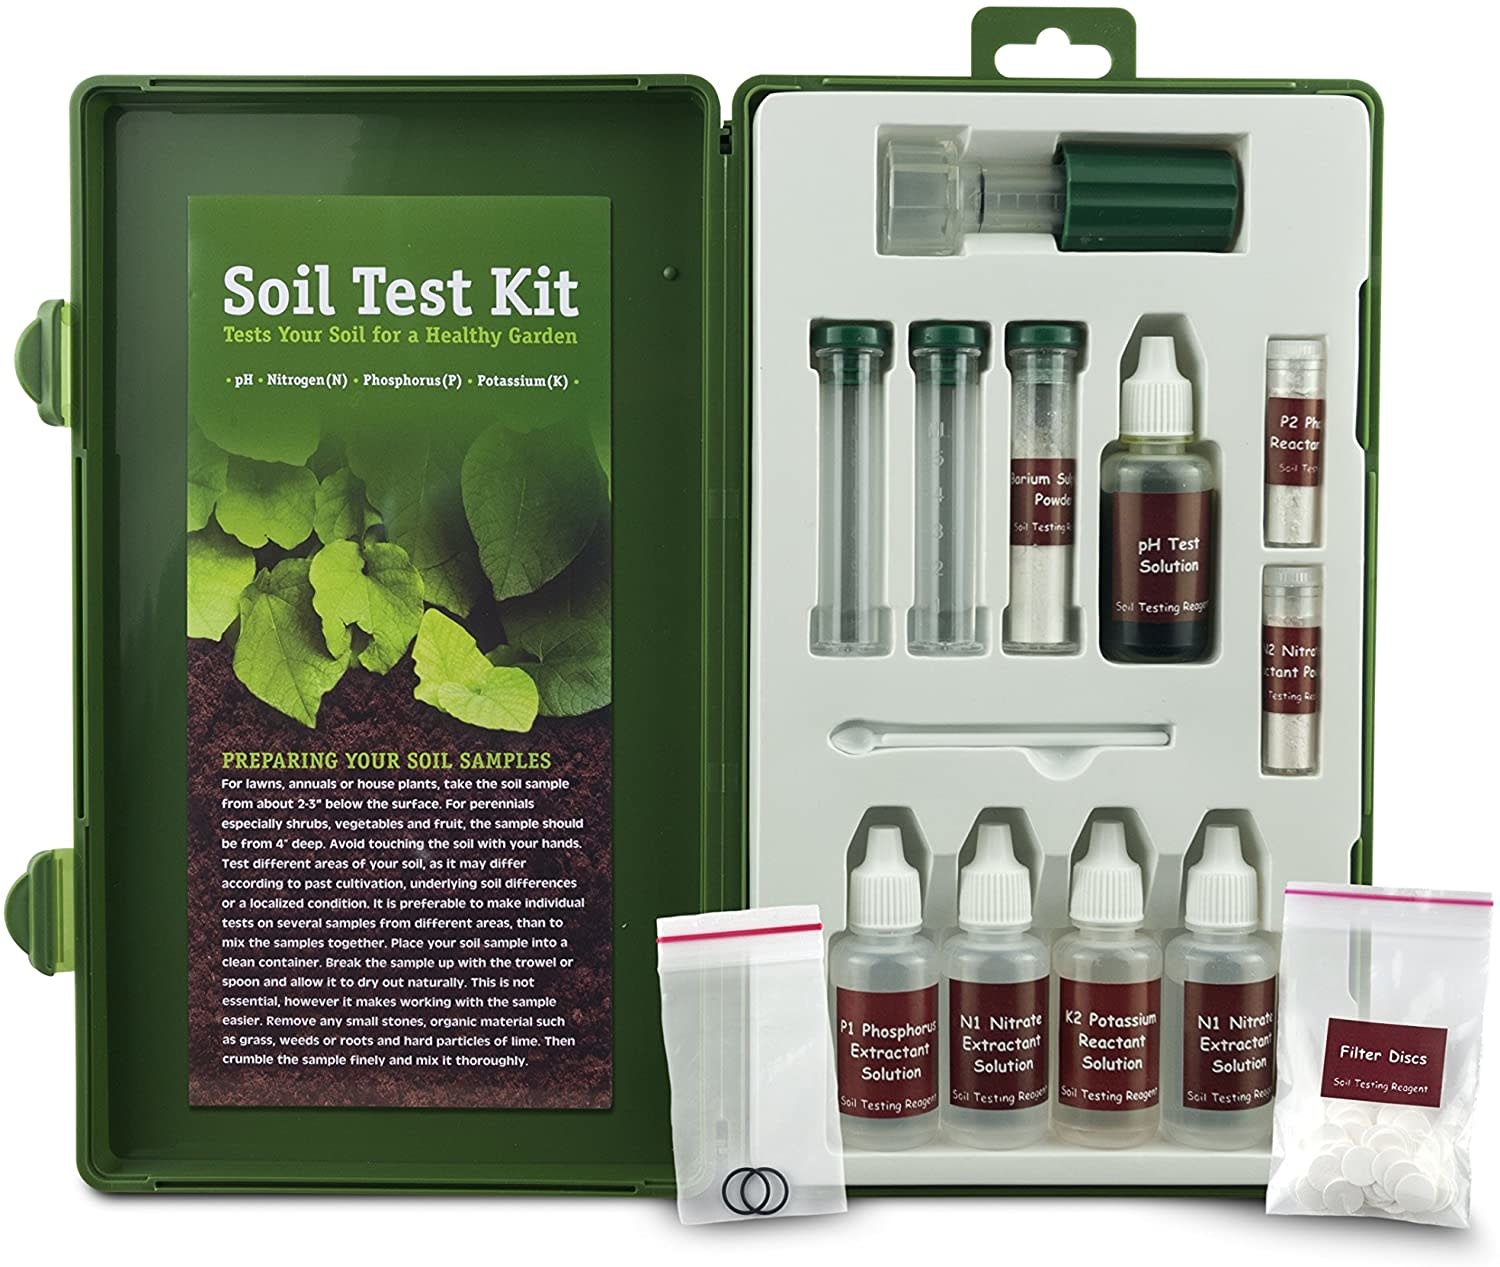 Enviromental Concepts Soil test kit